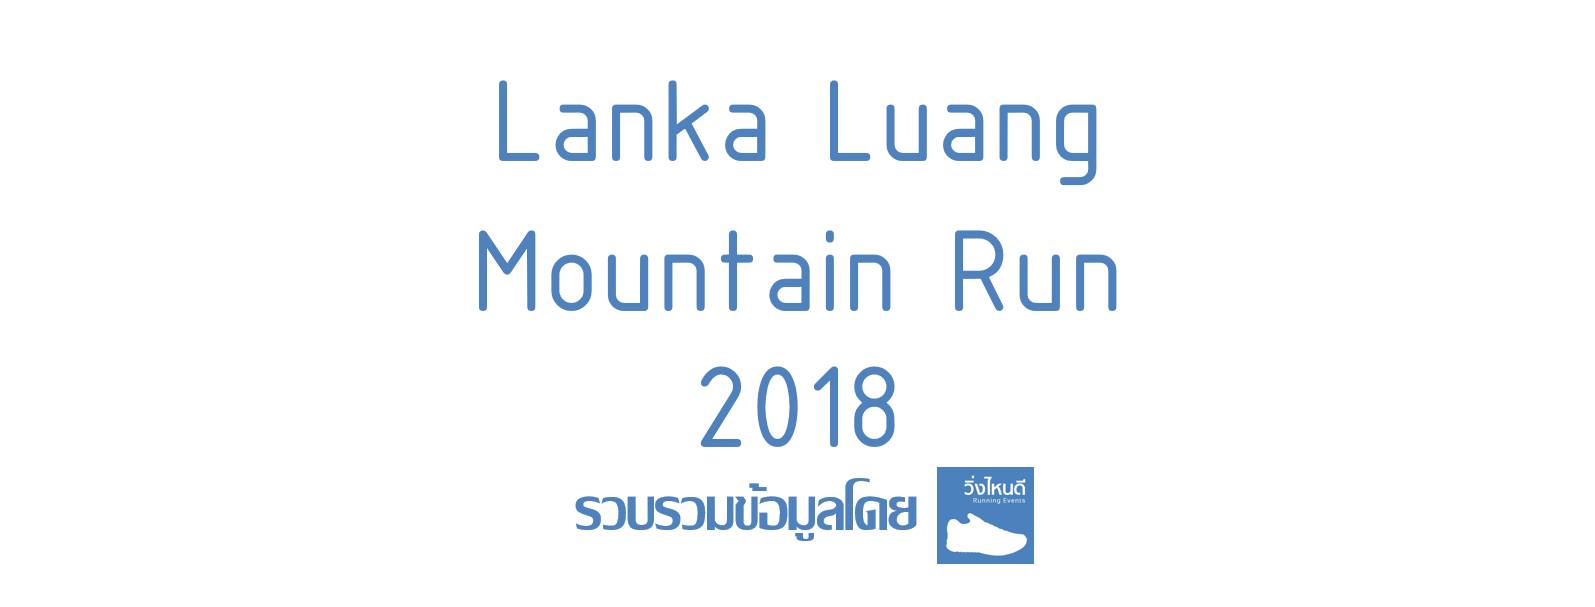 Lanka Luang Mountain Run 2018